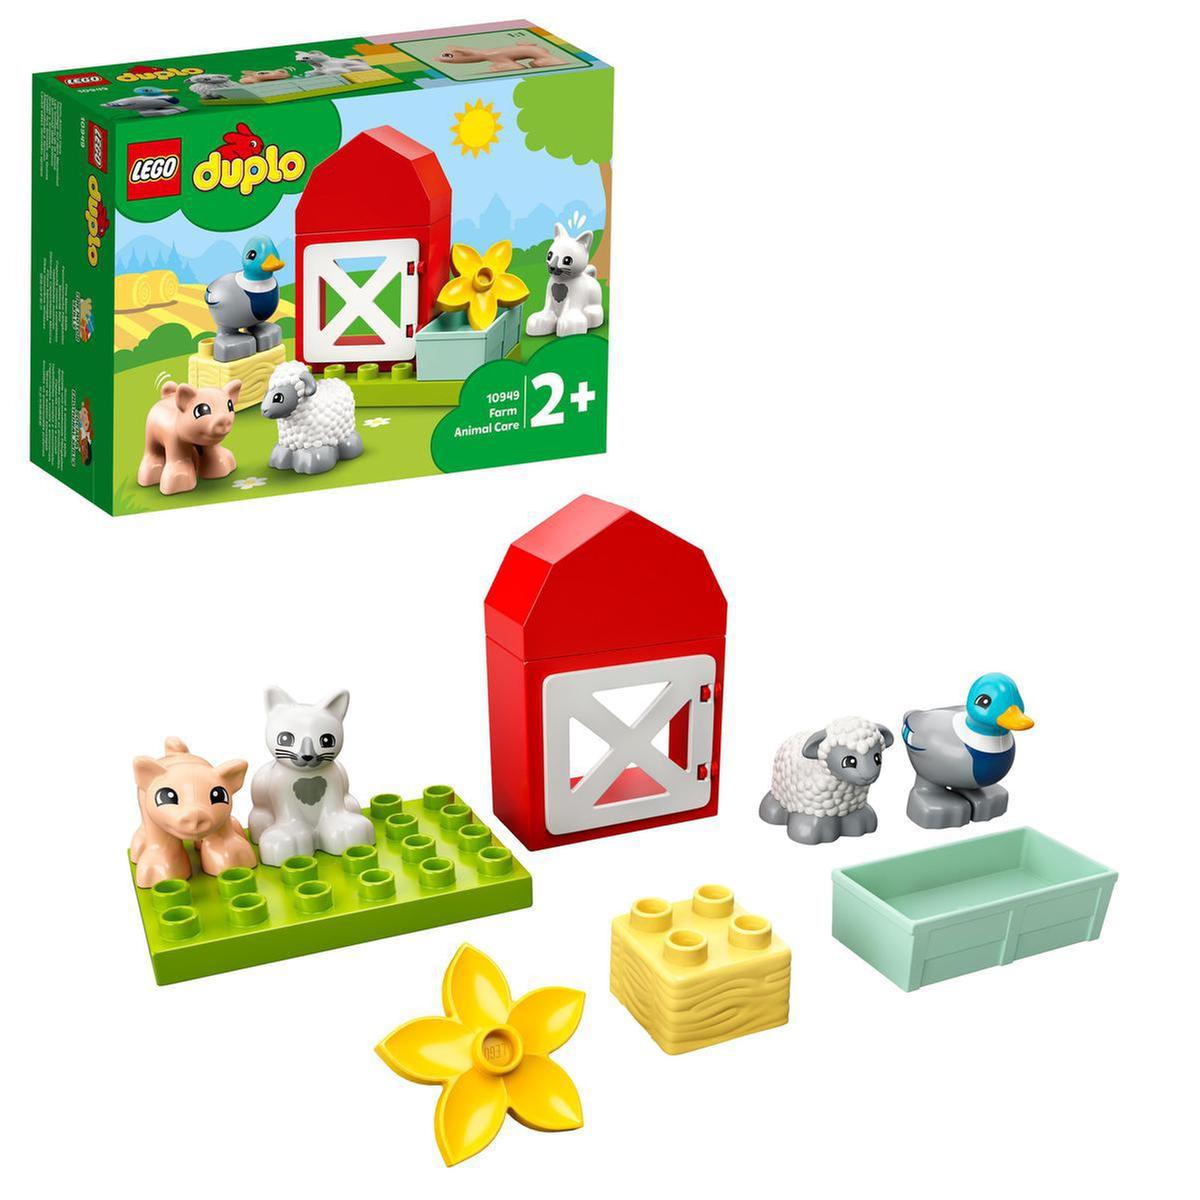 LEGO DUPLO - Cuidar dos animais da quinta - 10949 | LEGO TIJOLOS E BASES |  Loja de brinquedos e videojogos Online Toysrus